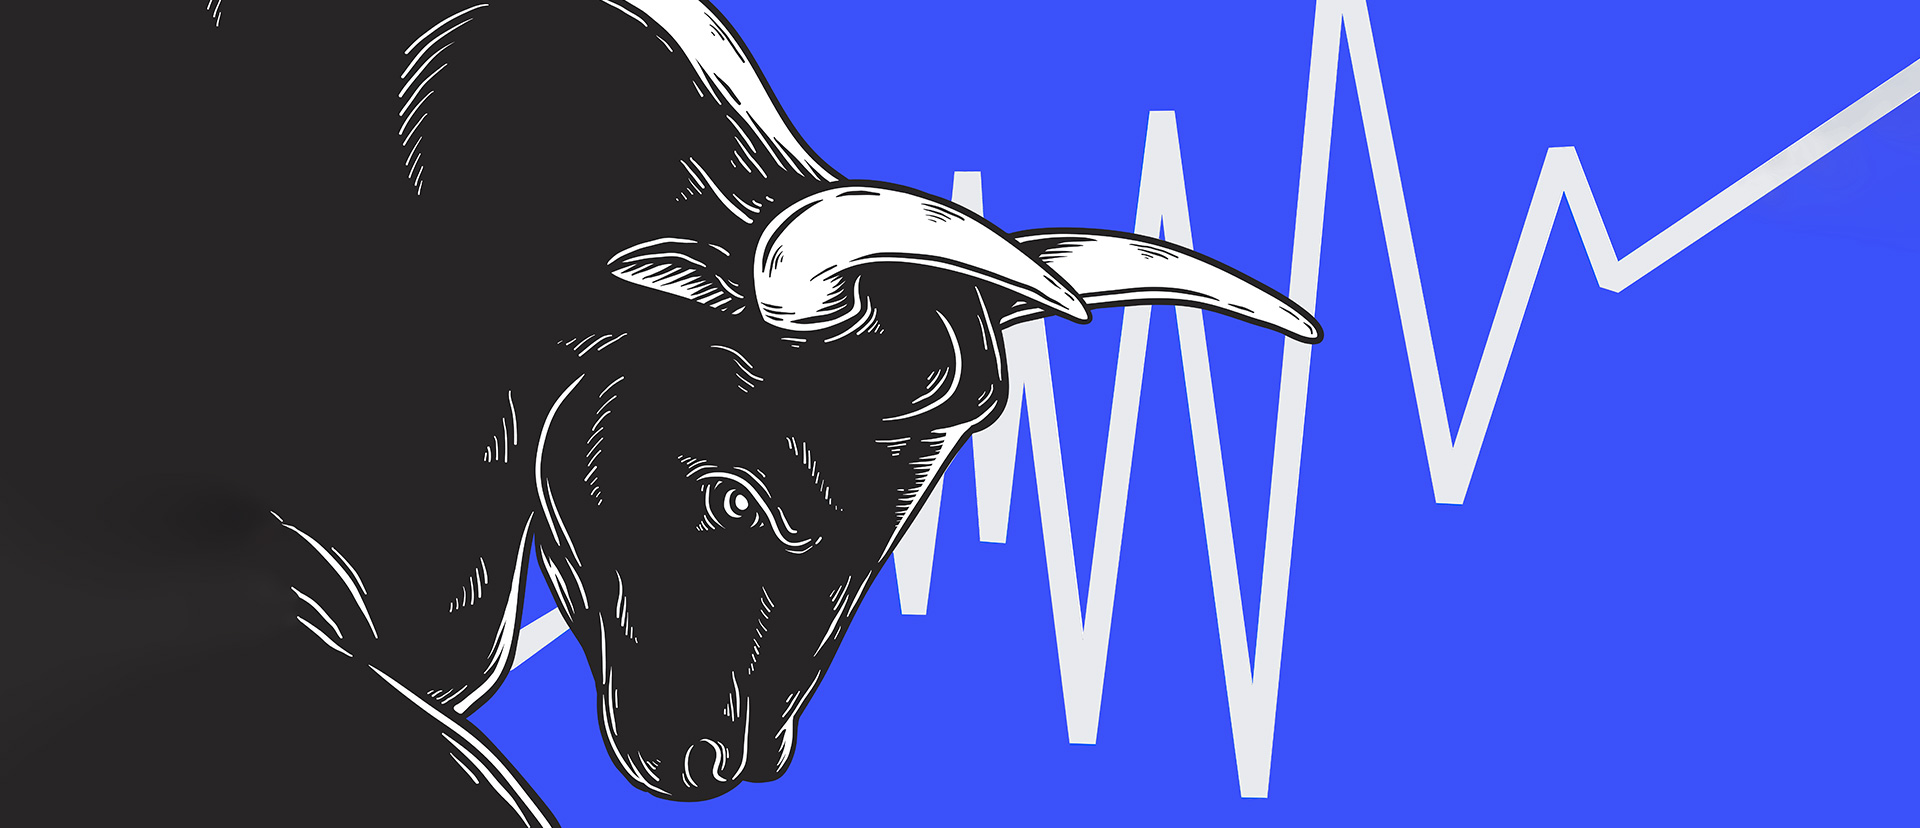 Bull Market: Characteristic and Trading Principles